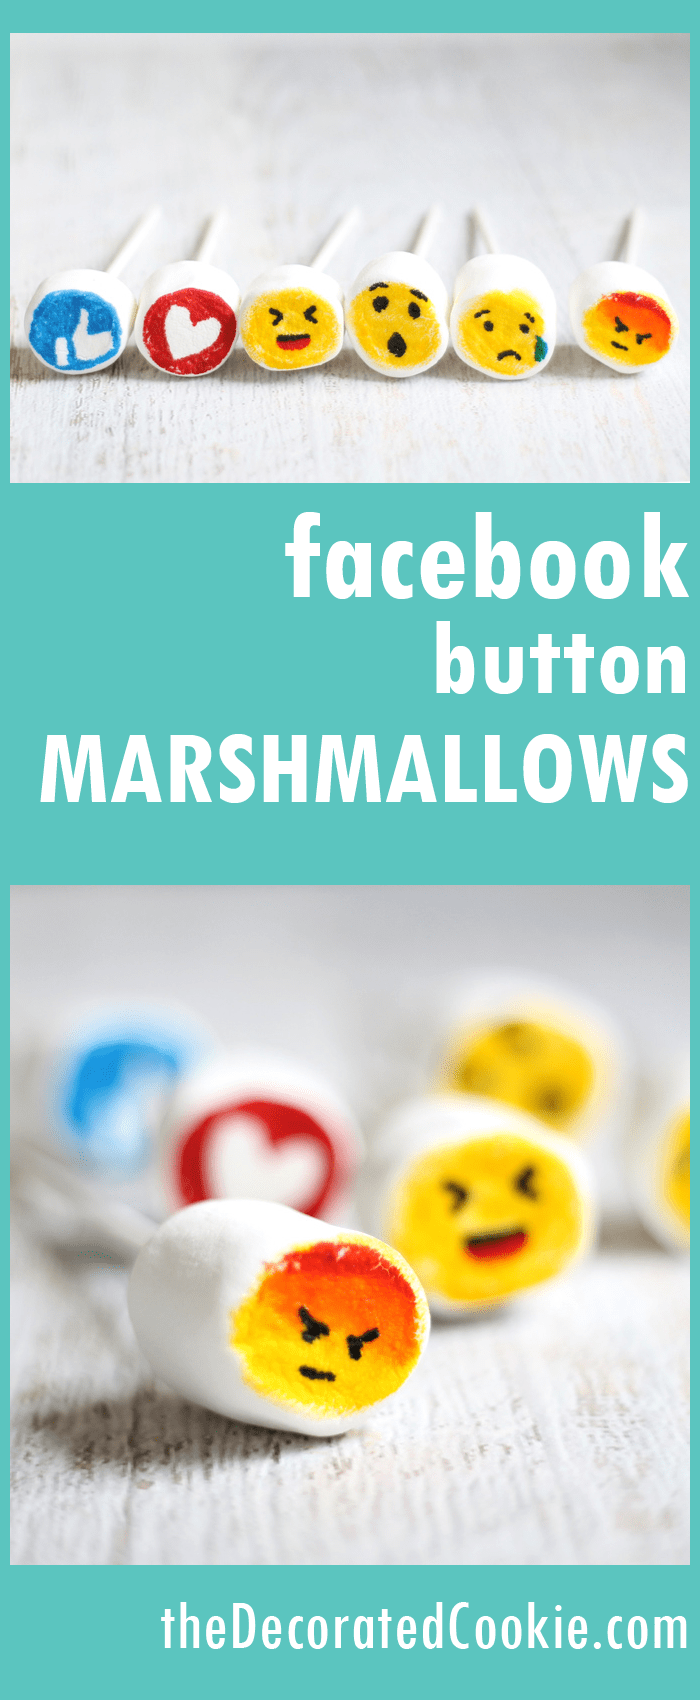 facebook like button marshmallows 